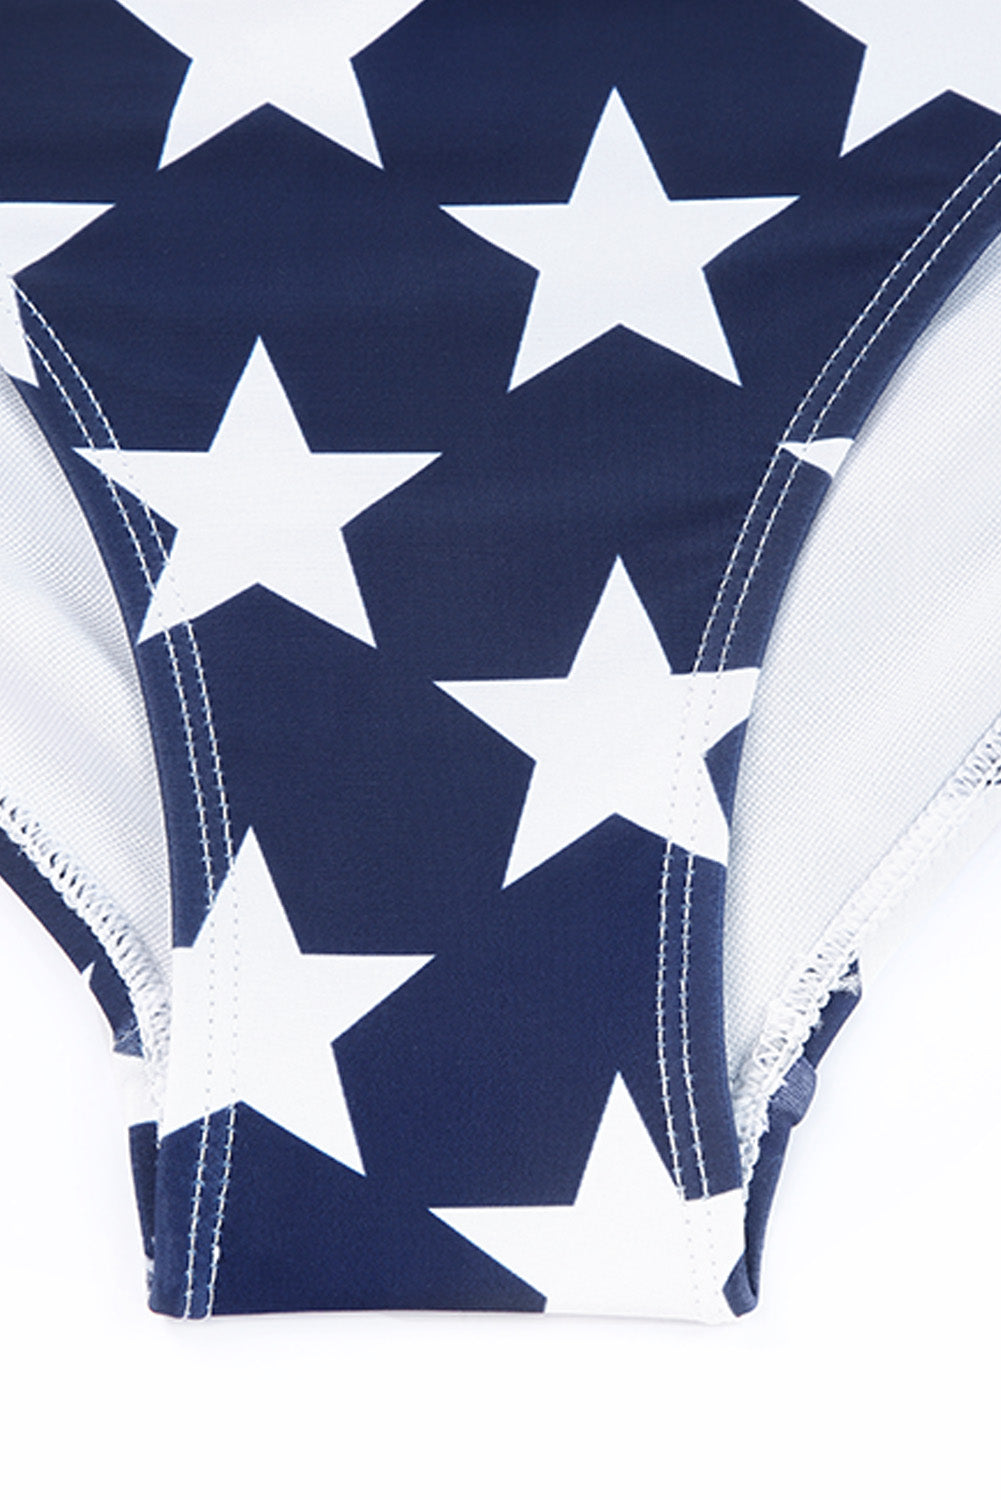 Stars & Stripes American Flag Pattern Patchwork Bikini Swimsuit